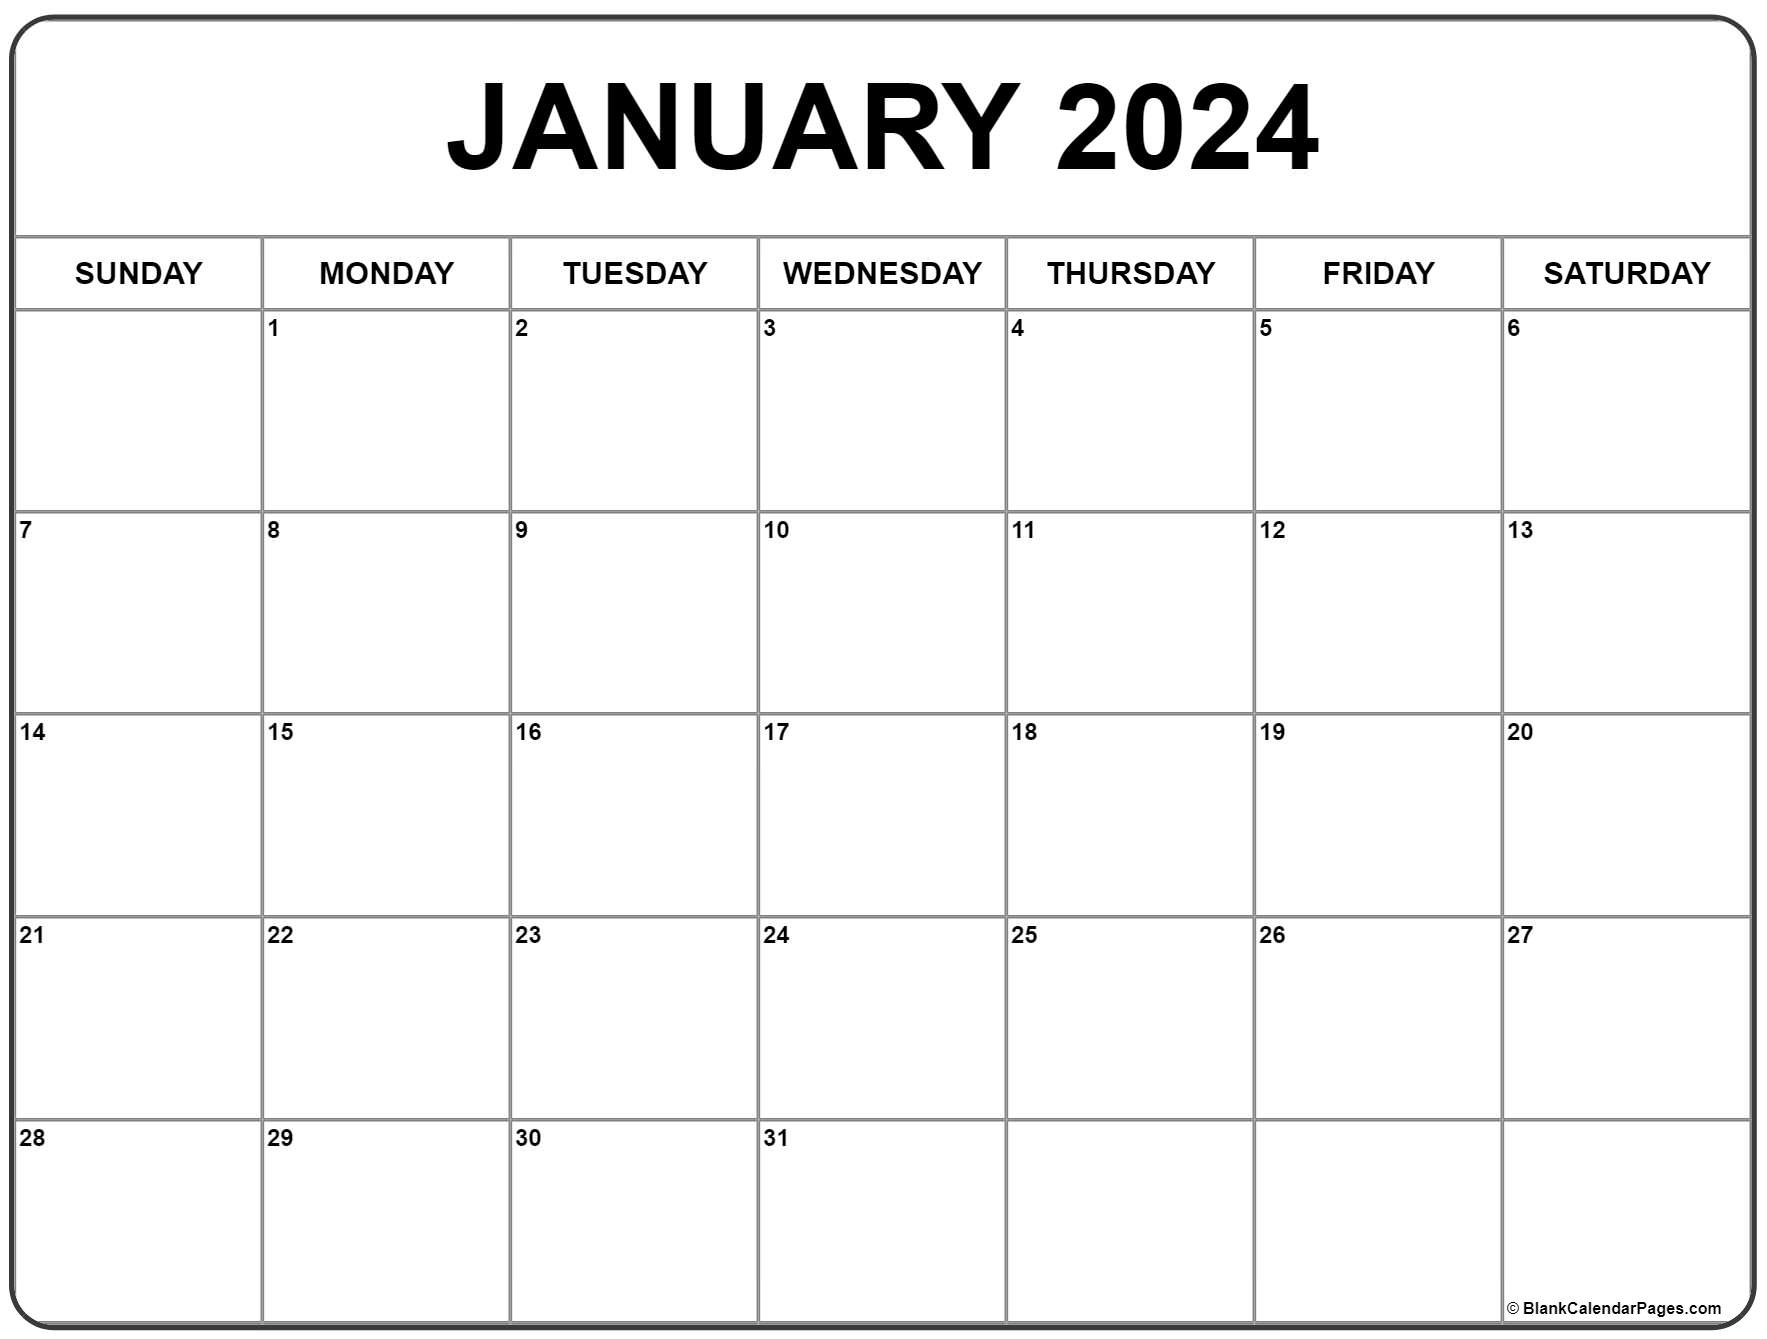 January 2024 Calendar | Free Printable Calendar for Free Printable Monthly January 2024 Calendar